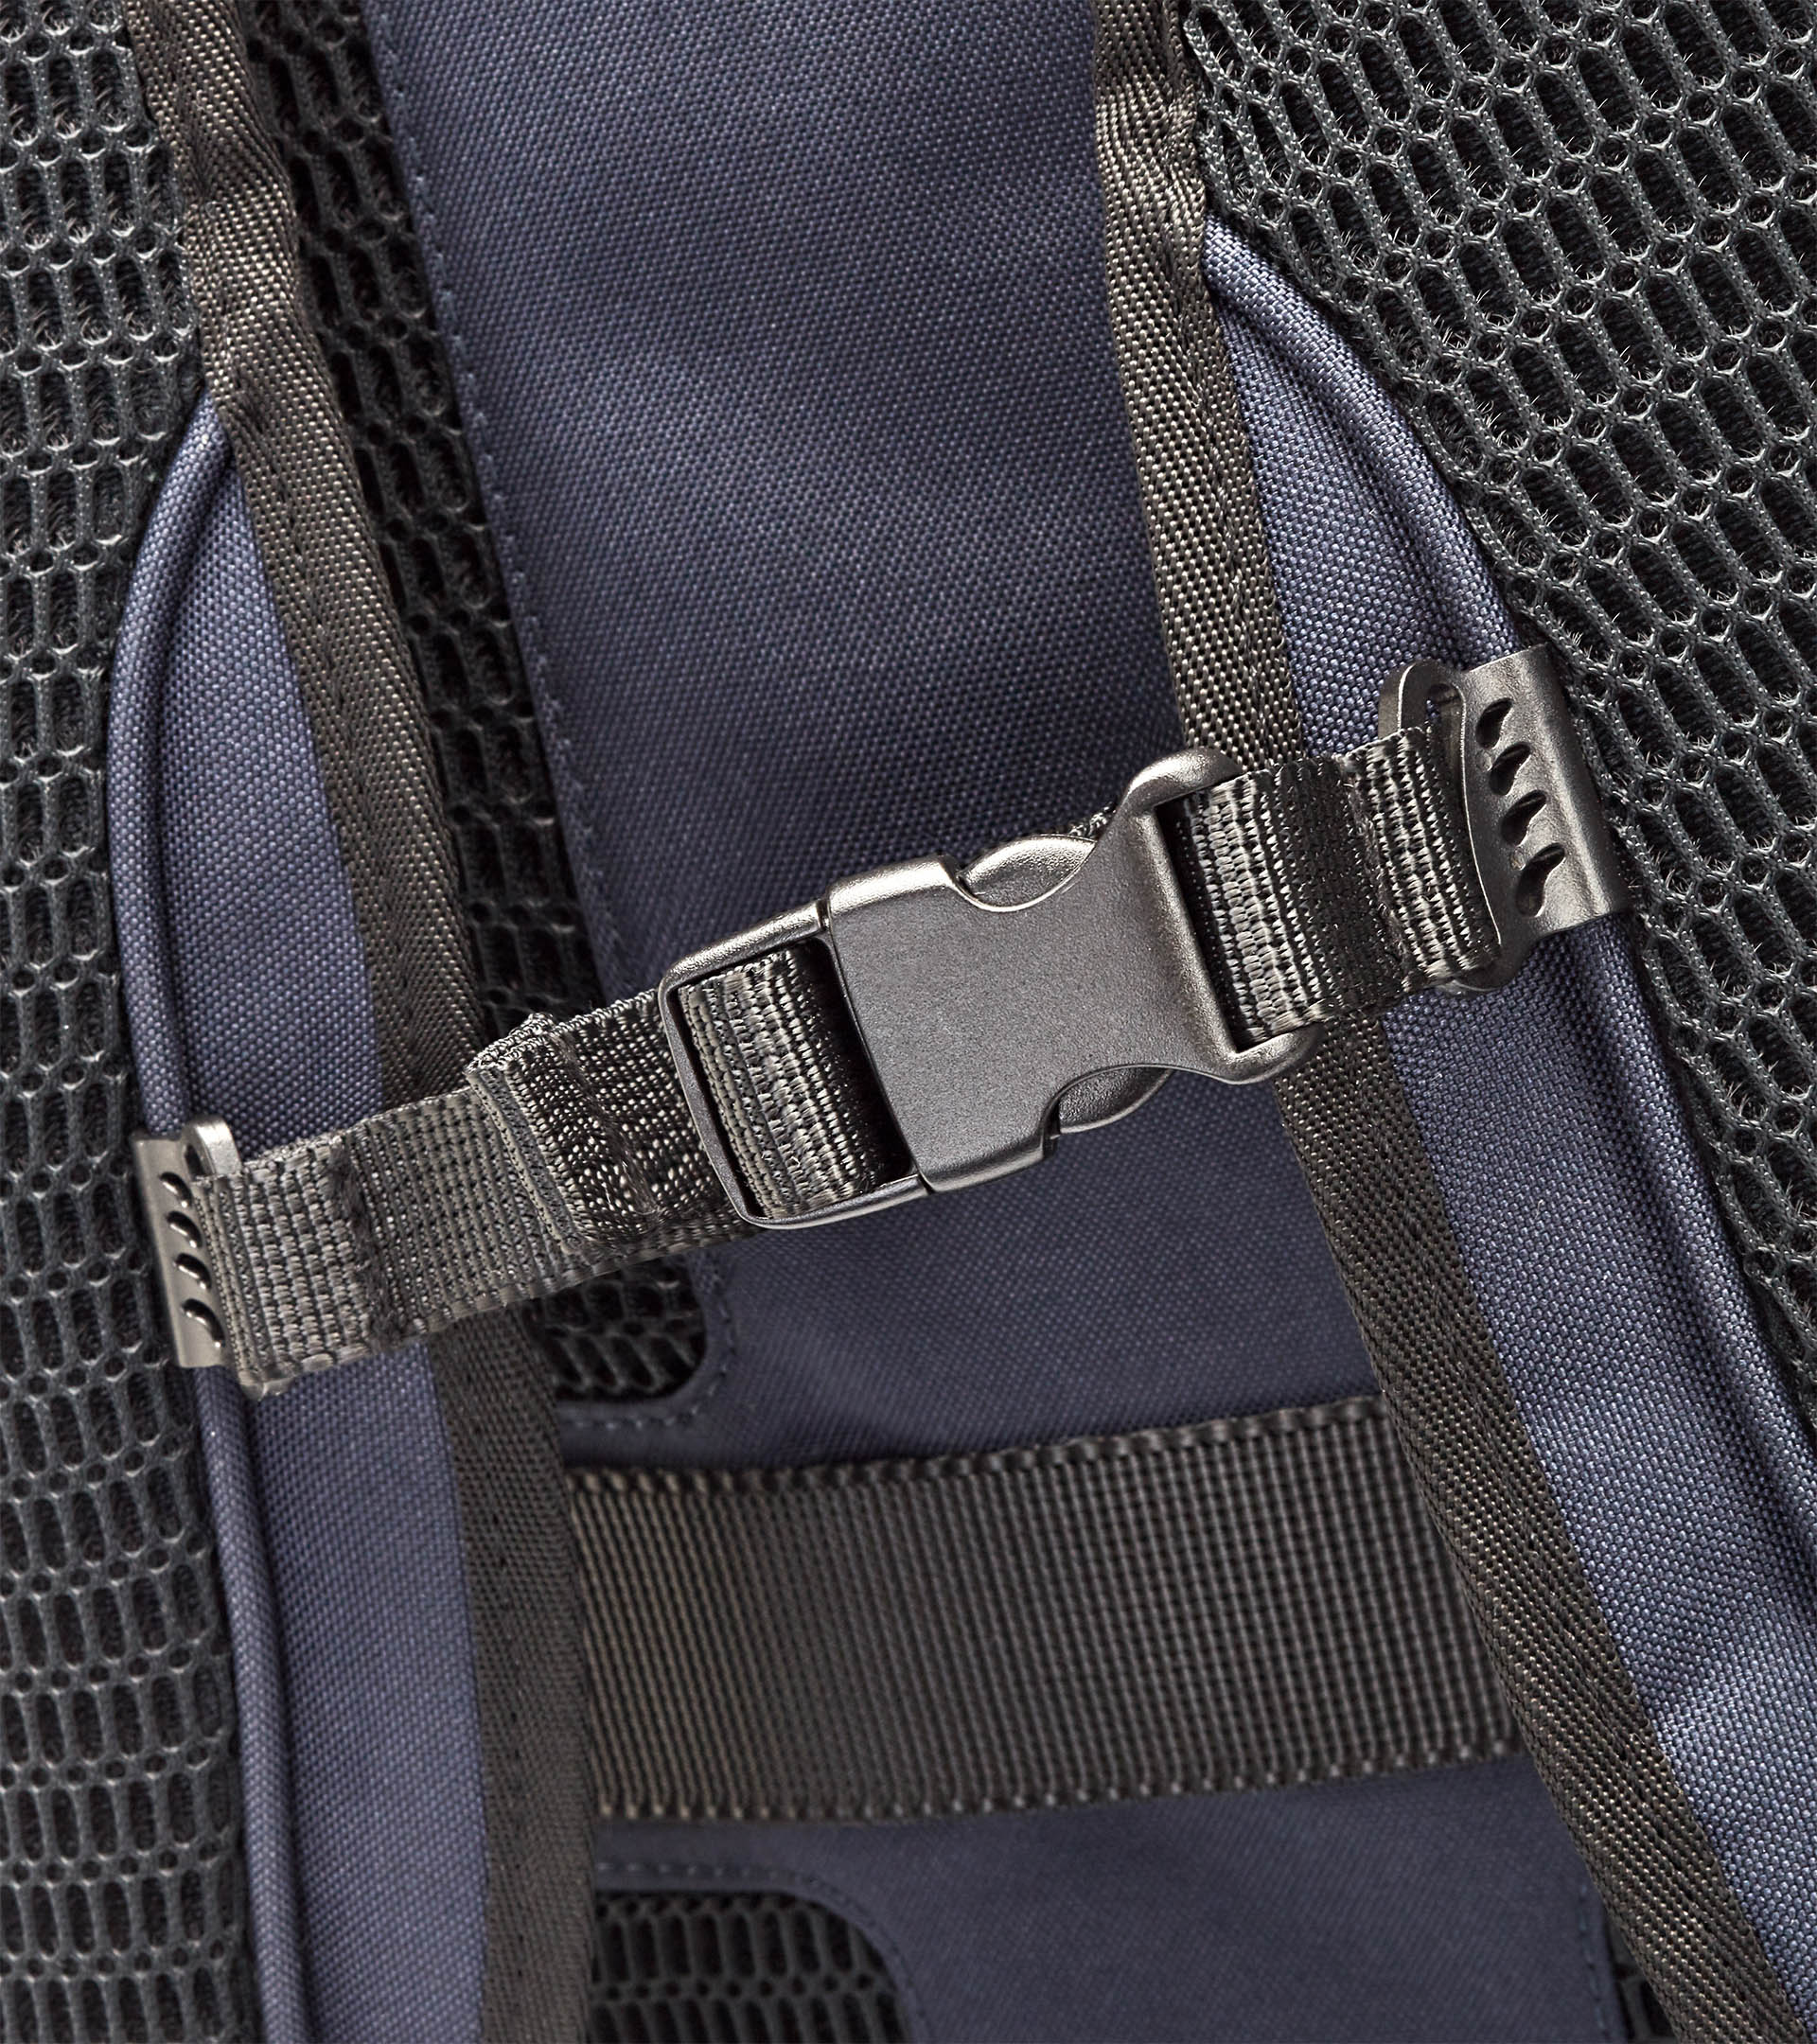 Urban Eco Cycling Backpack - Business Backpack for Men | Porsche Design ...